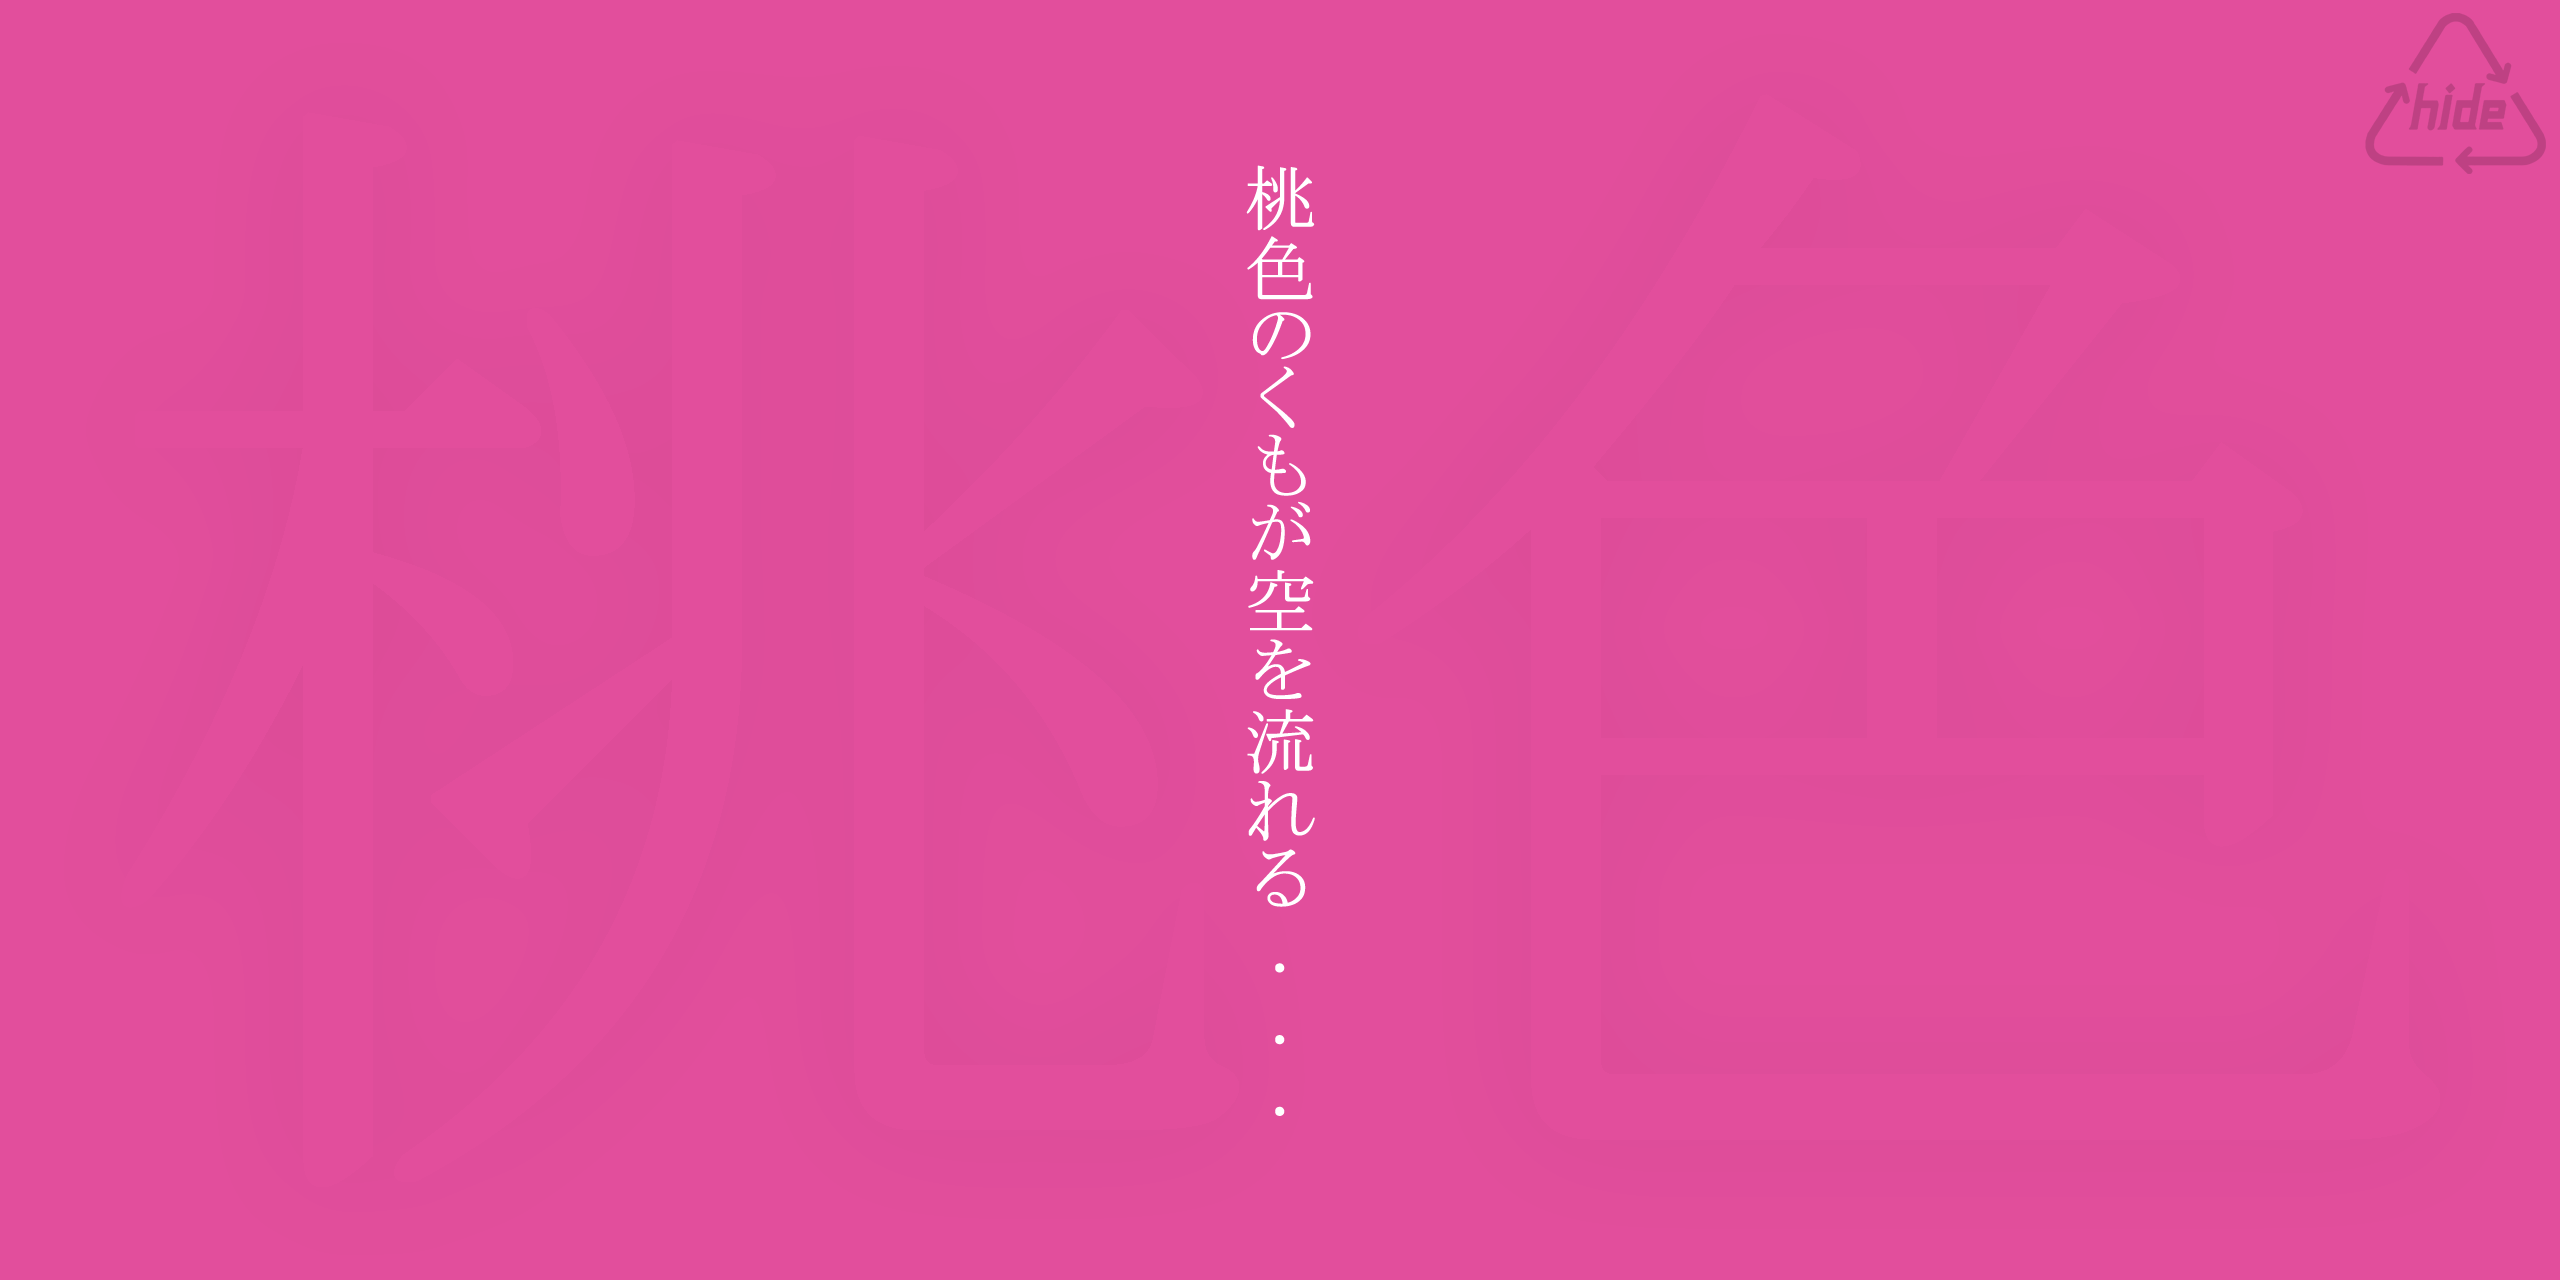 General 2560x1280 lyrics pink hide (musician) minimalism simple background digital art